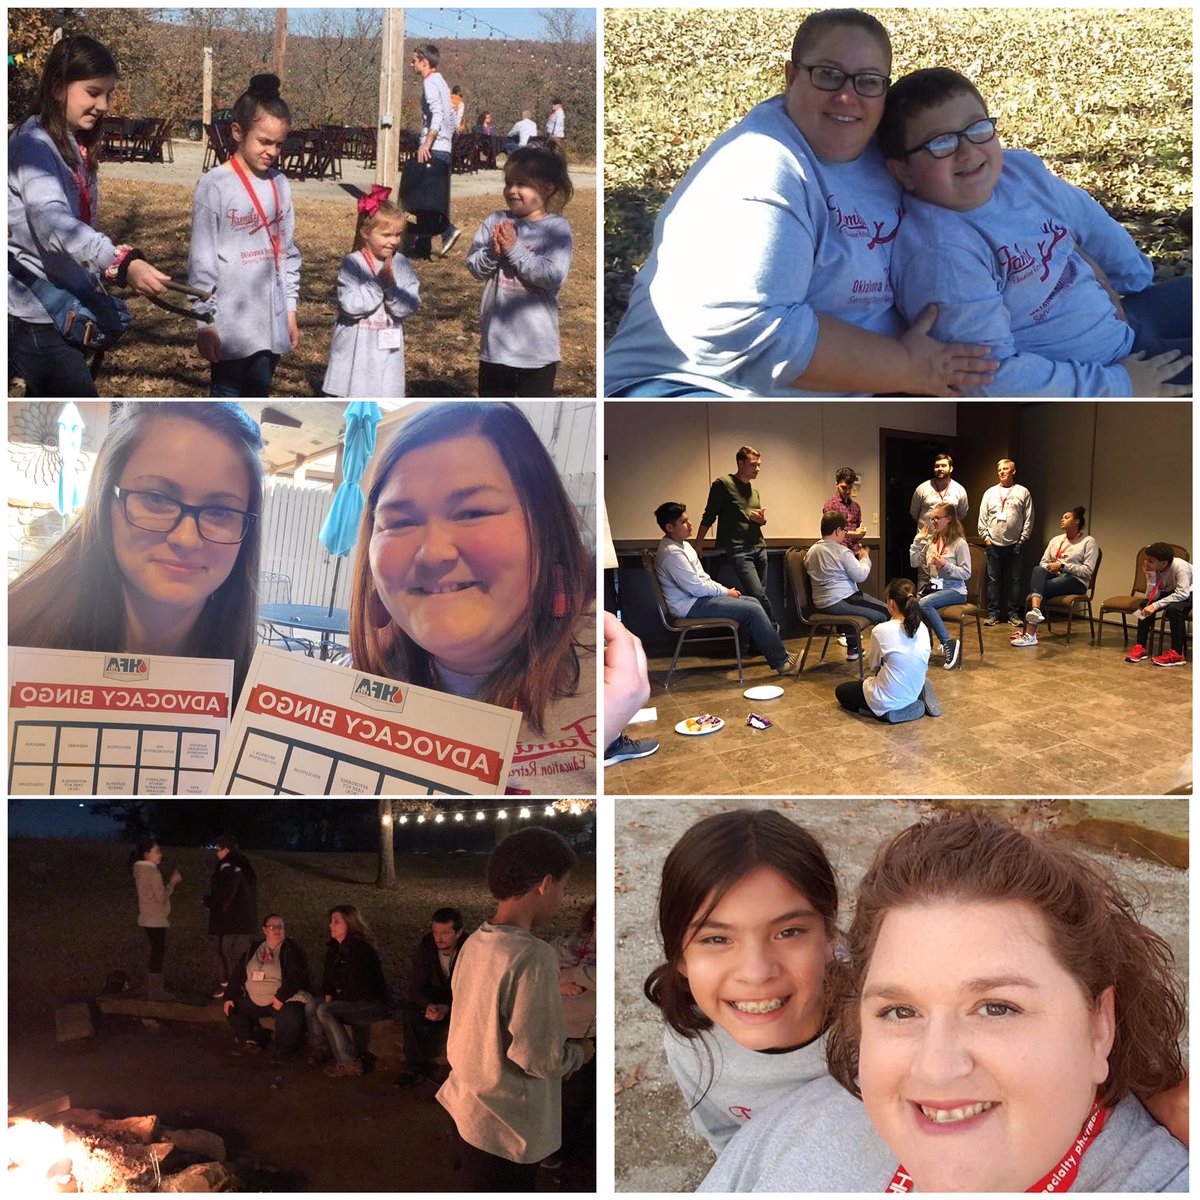 🍁 Photos from last weekend’s Family Education Retreat 2019!
#Family
#Education 
#OklahomaHemophiliaFoundation
#BleedingDisorders
#Hemophilia
#VonWillebrands 
#FactorDeficiency
#ITP
#Oklahoma 
#OKHemophilia